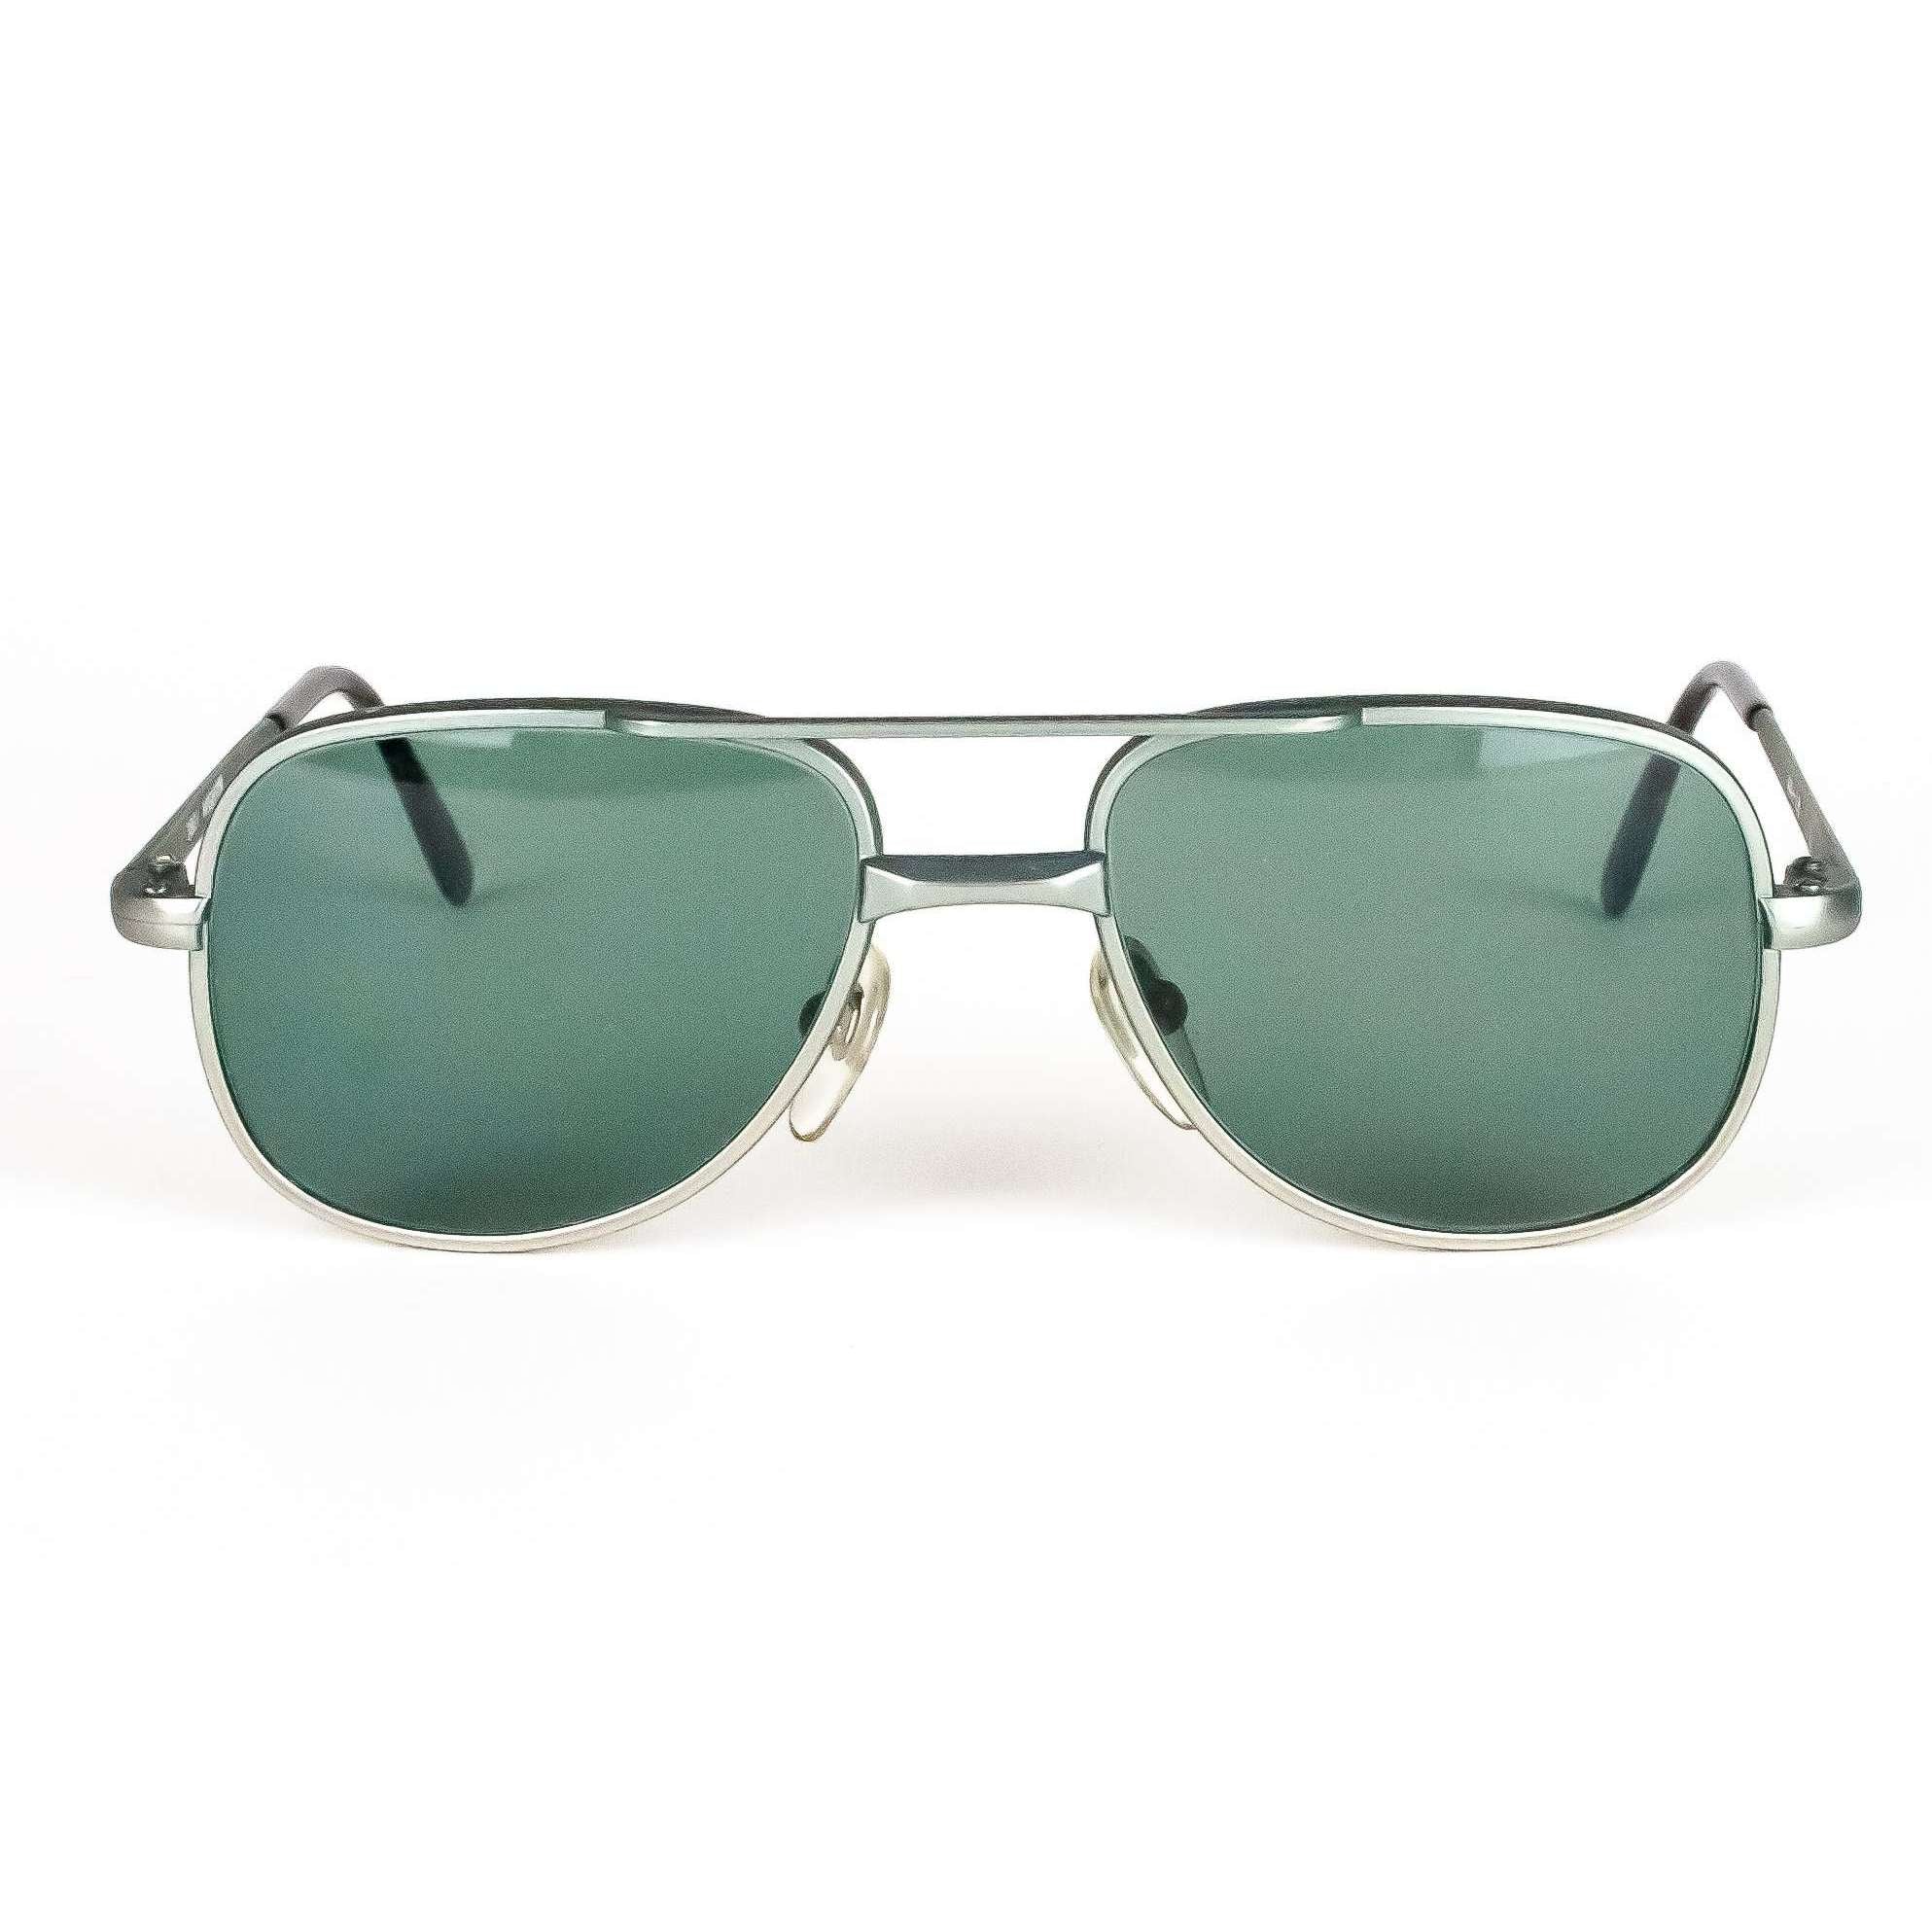 Little Bay Black Aviator-style Sunglasses